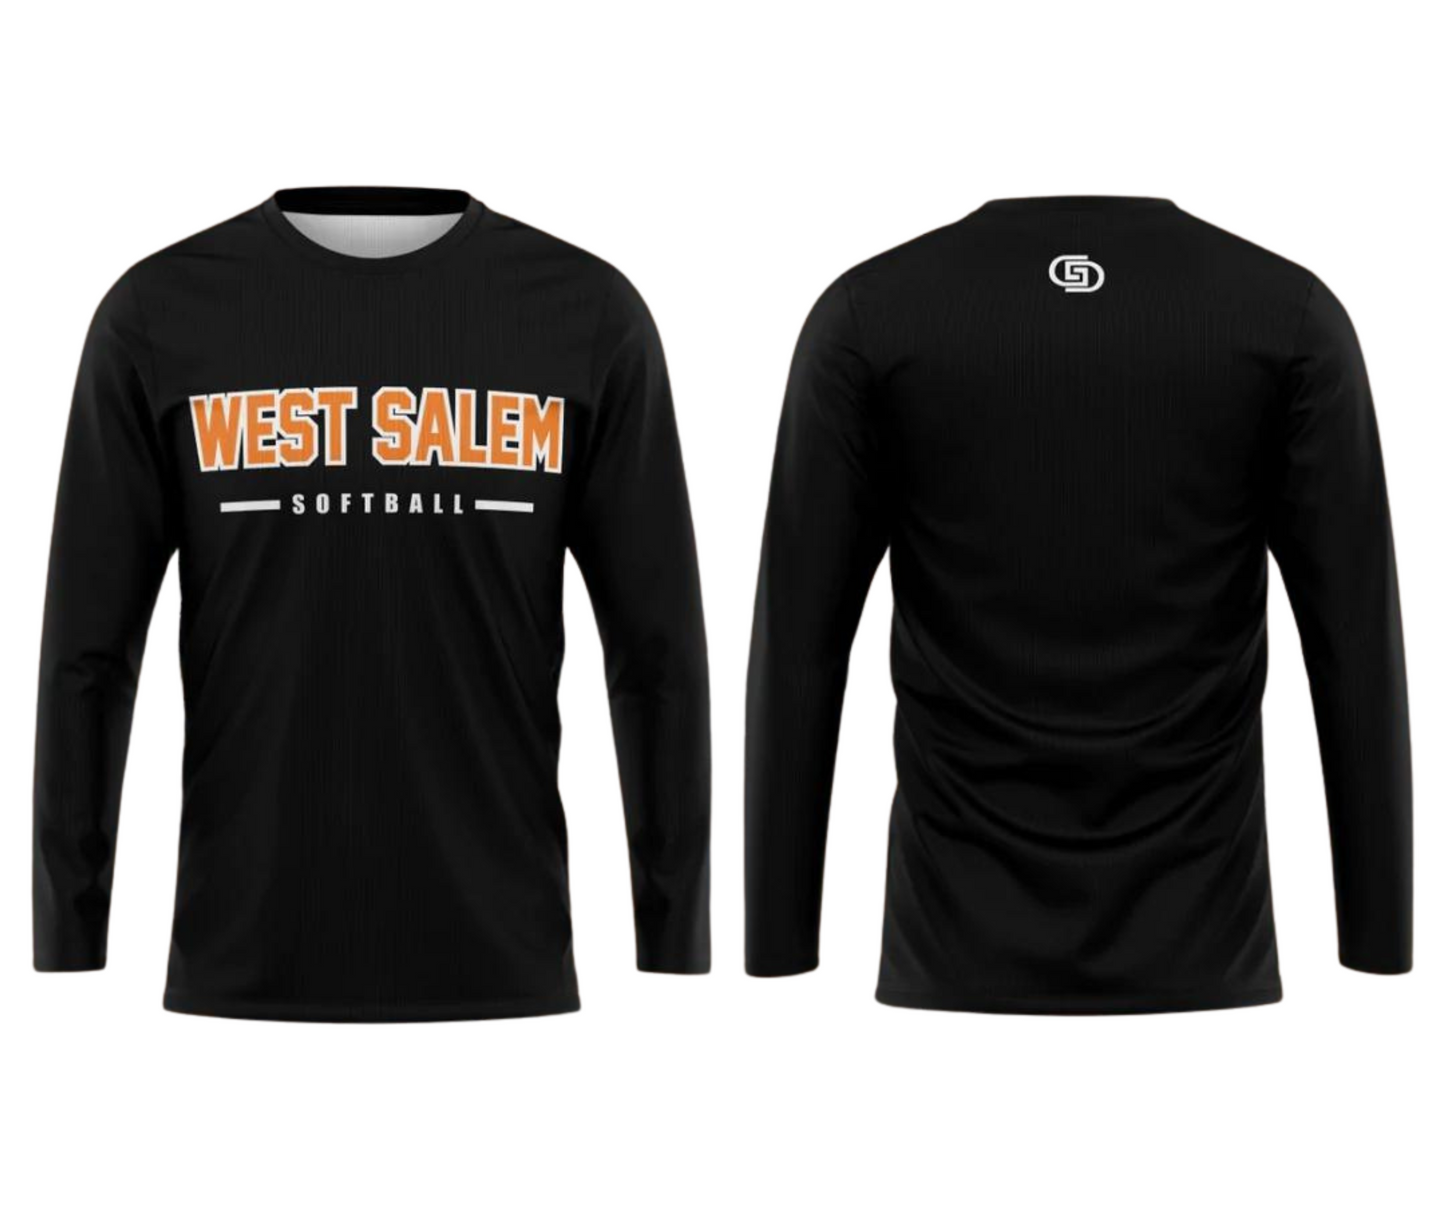 West Salem "Pick a Sport" Long Sleeve